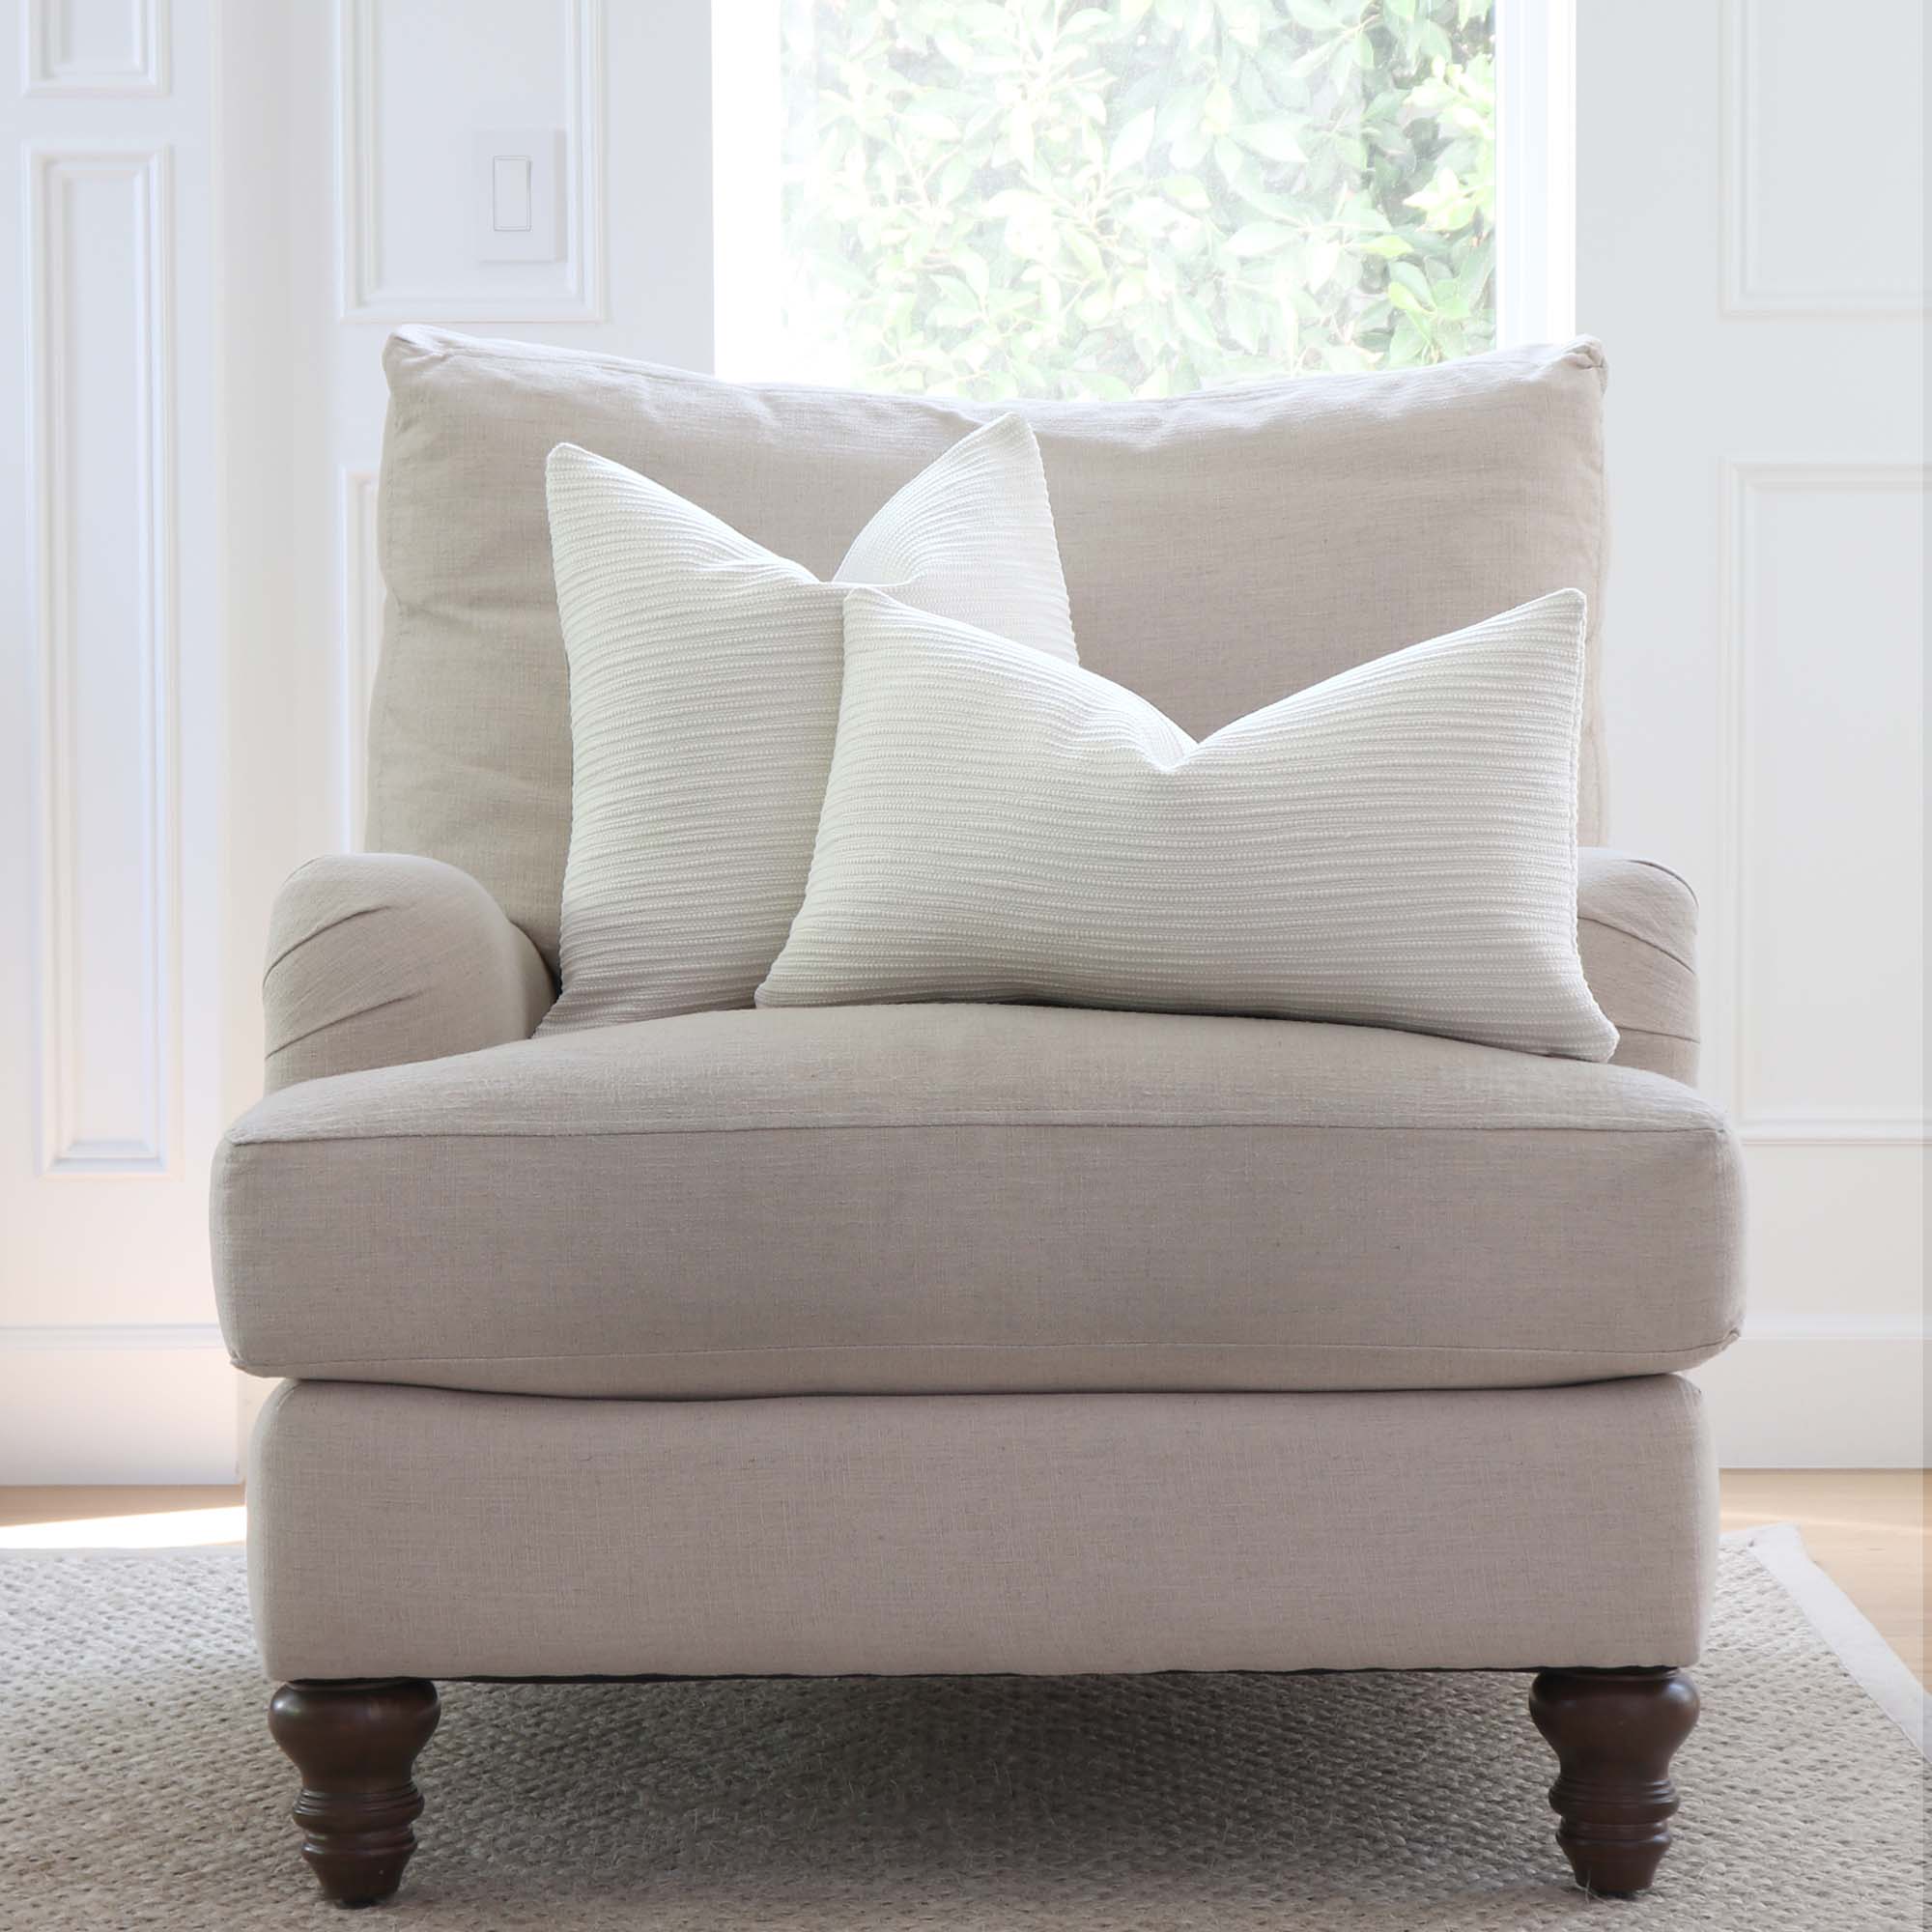 Zak + Fox Jibari Textured White Luxury Designer Throw Pillow Cover on Accent Chair in Home